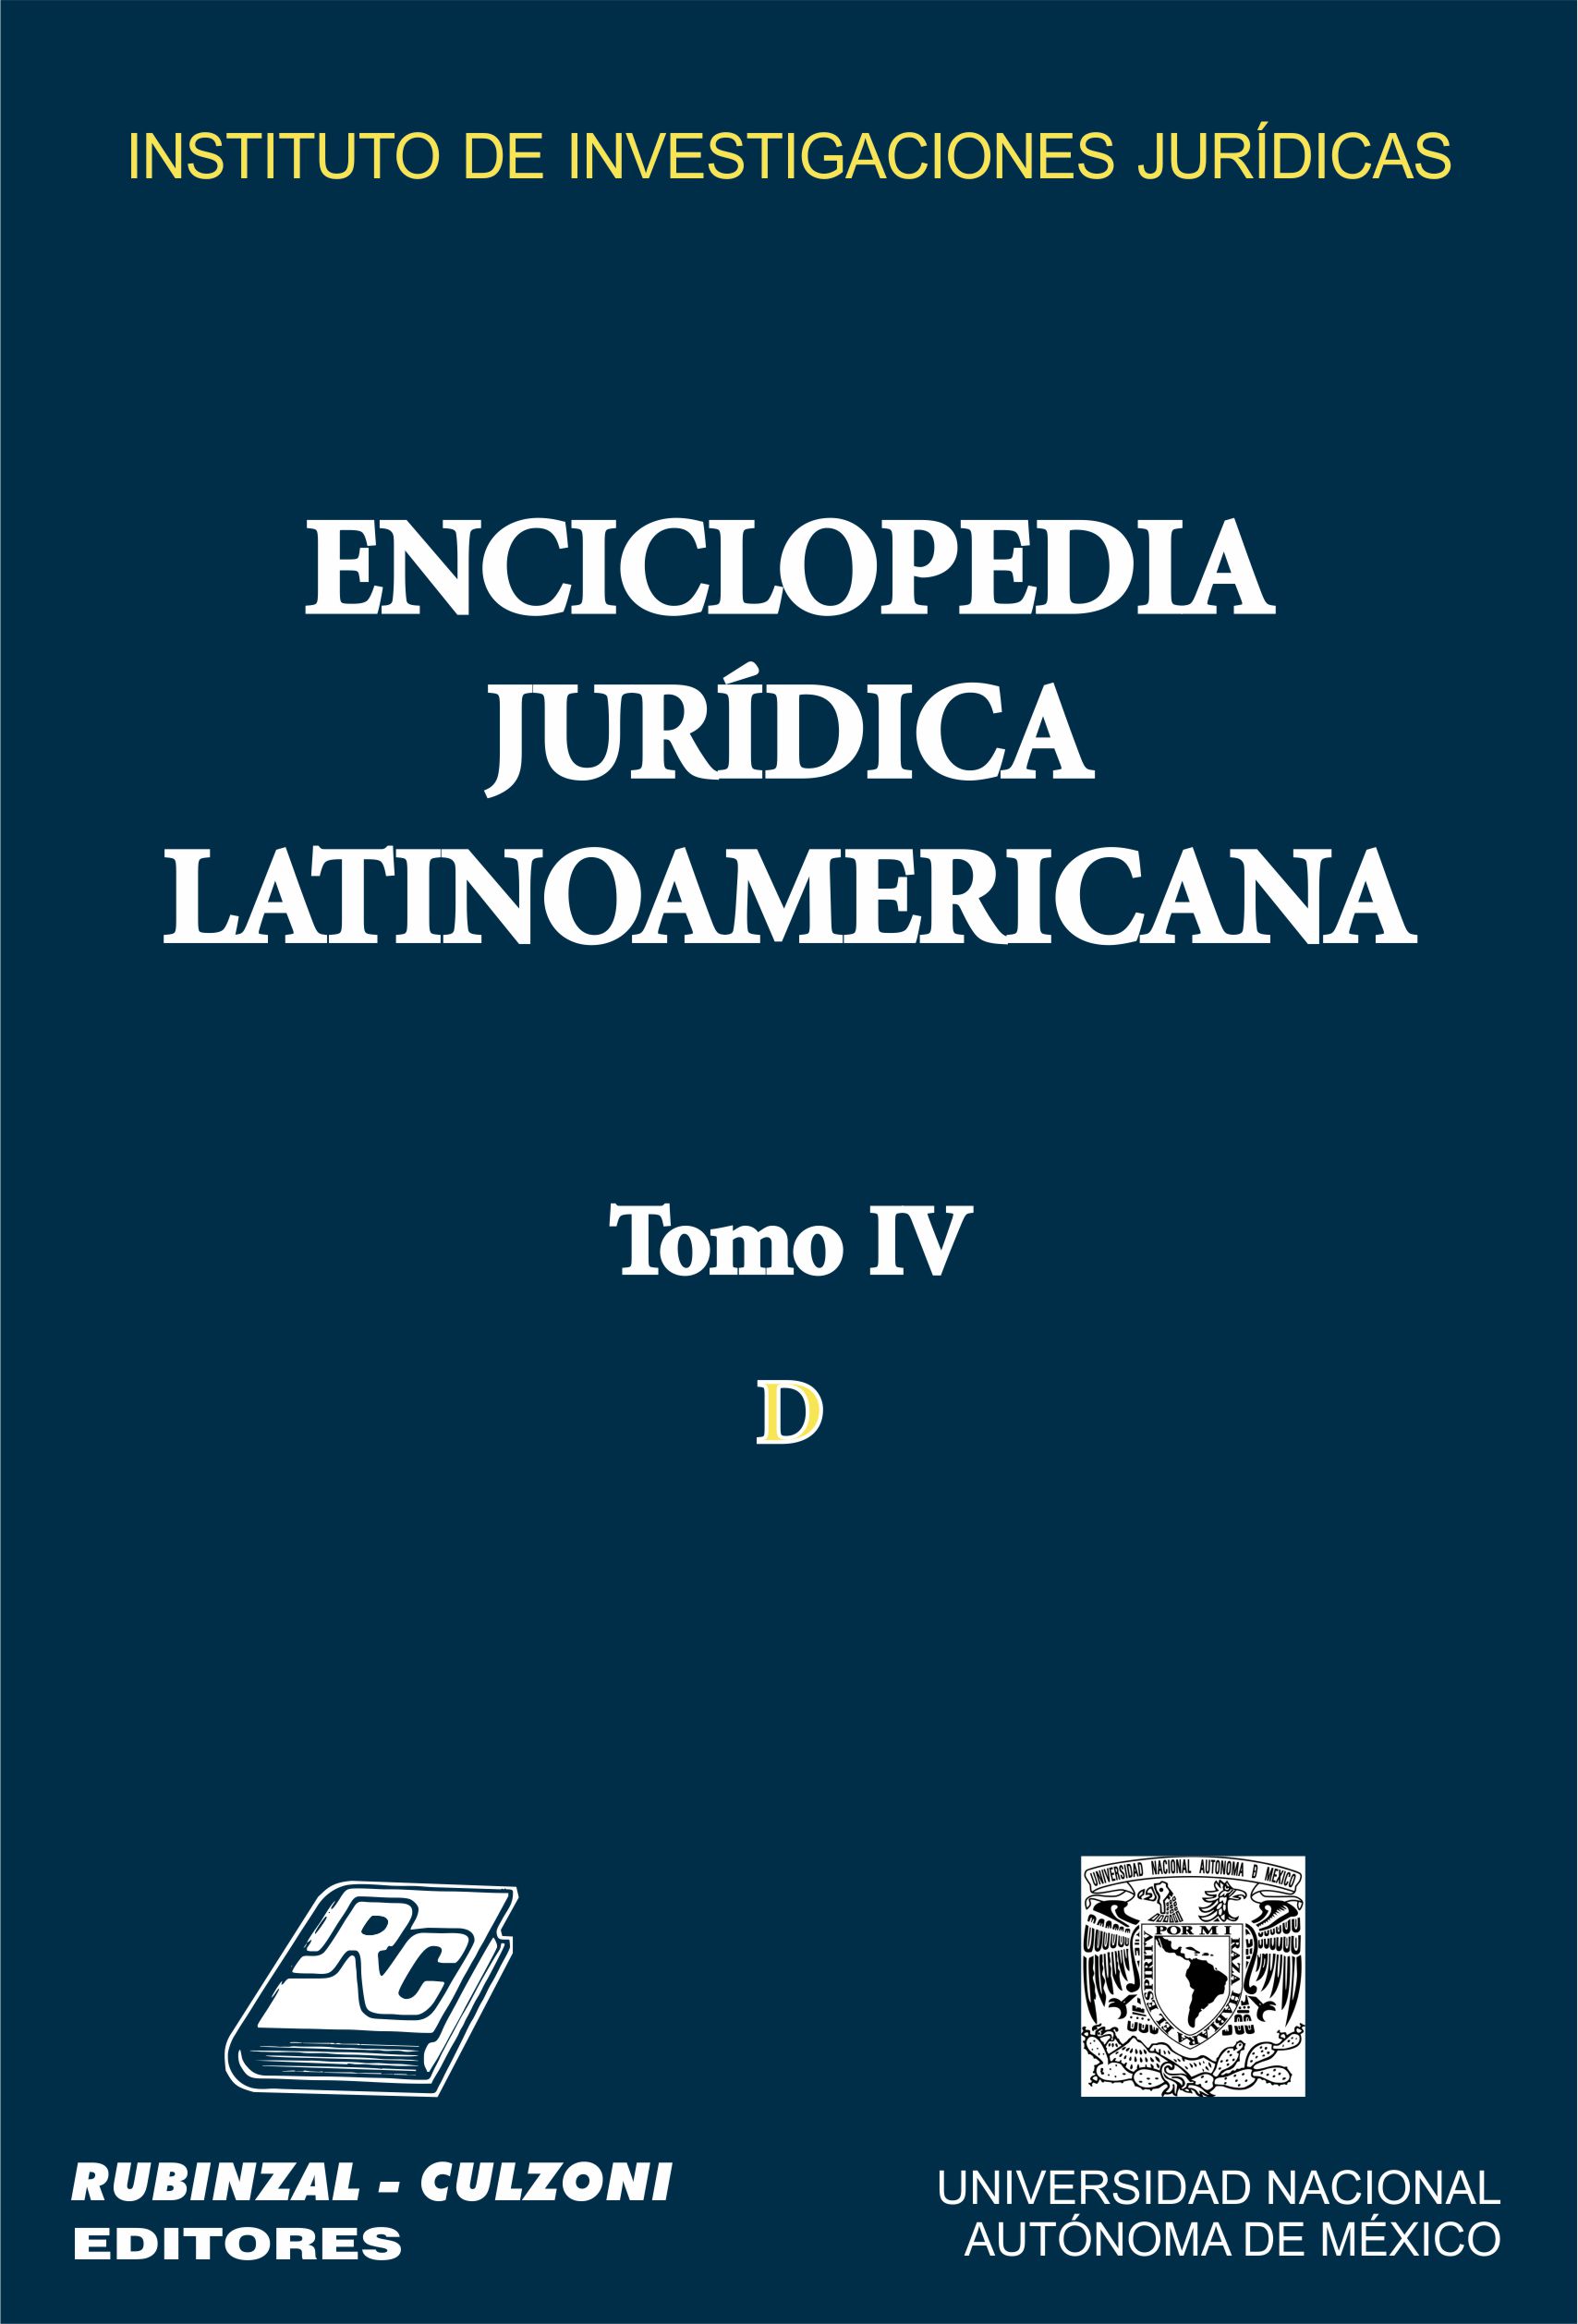 Enciclopedia Jurídica Latinoamericana. - Tomo IV (D).